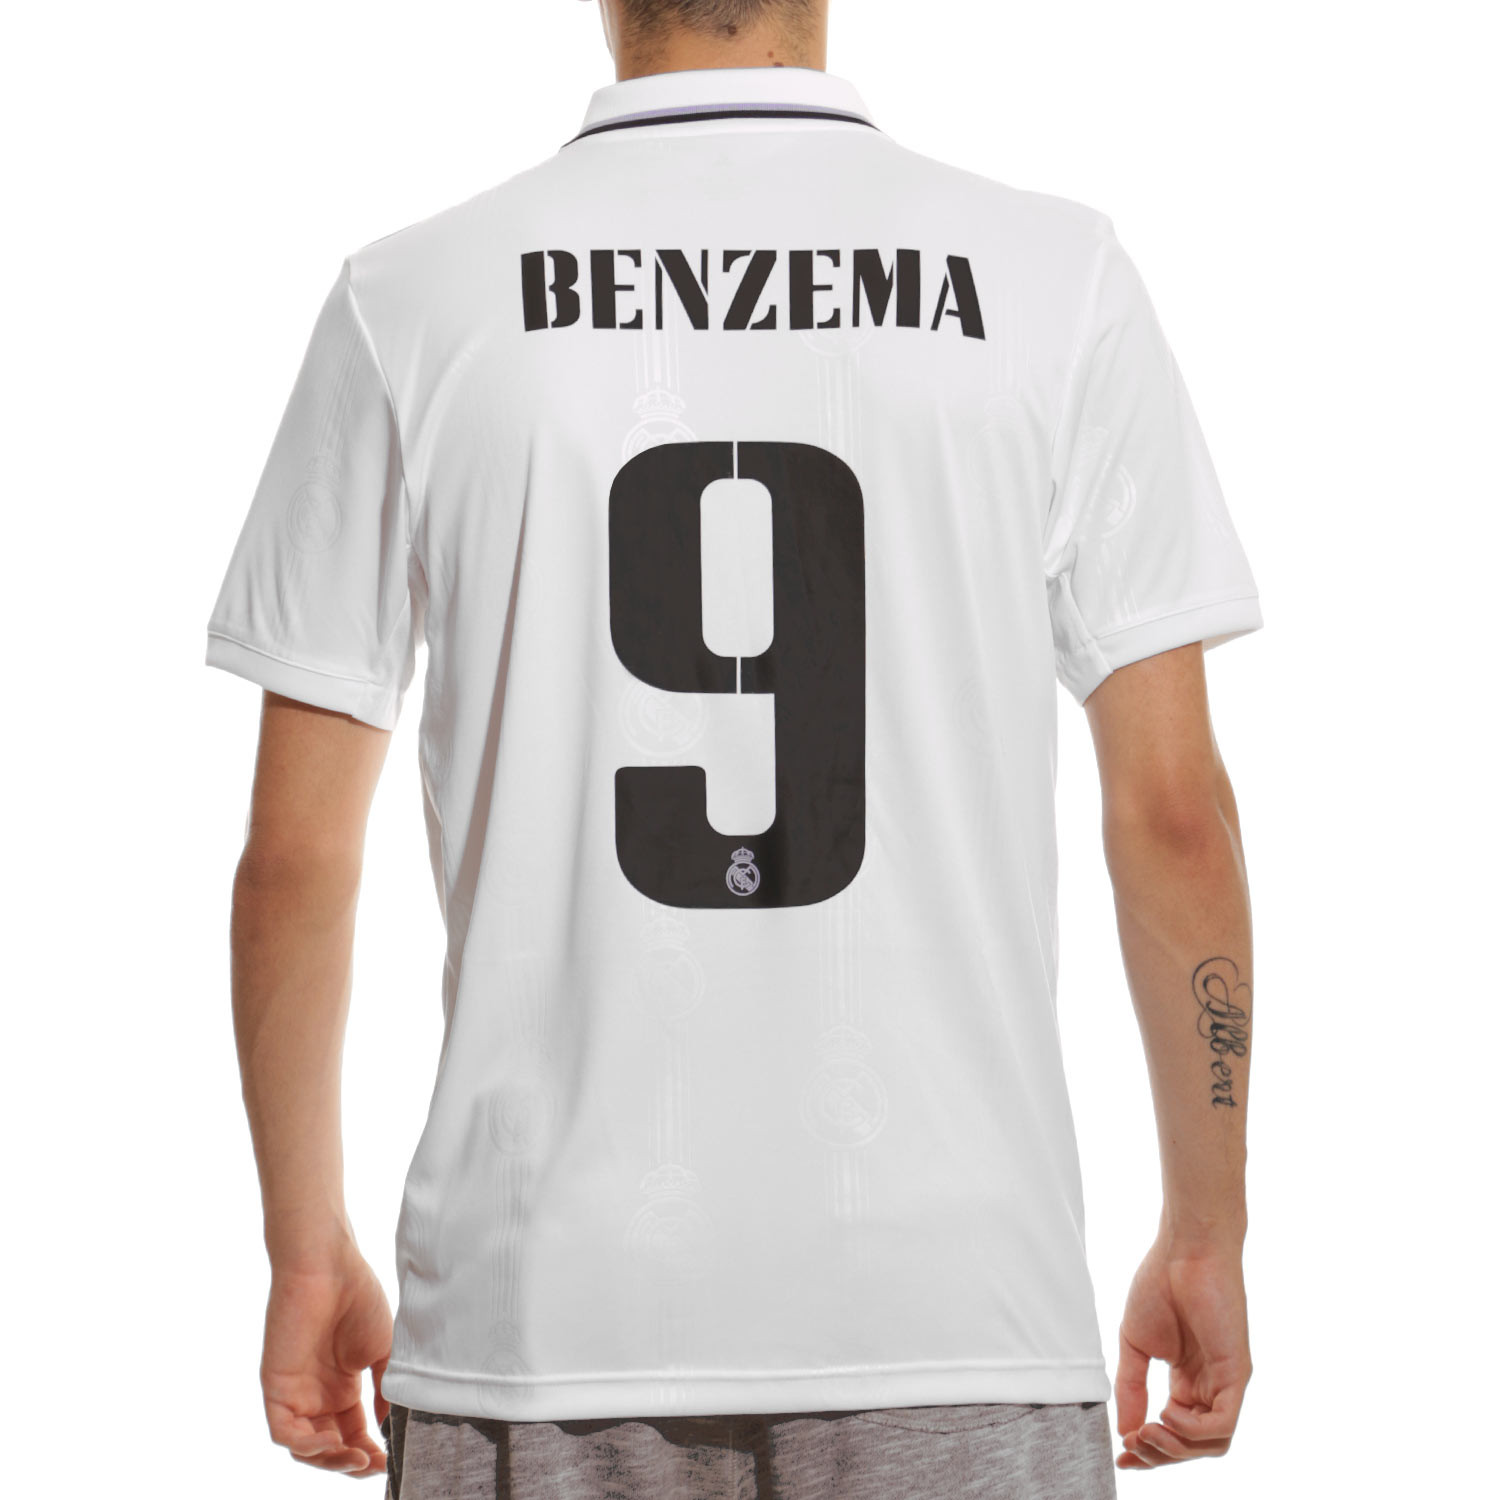 Camiseta adidas Real Madrid 2022 2023 Benzema blanca